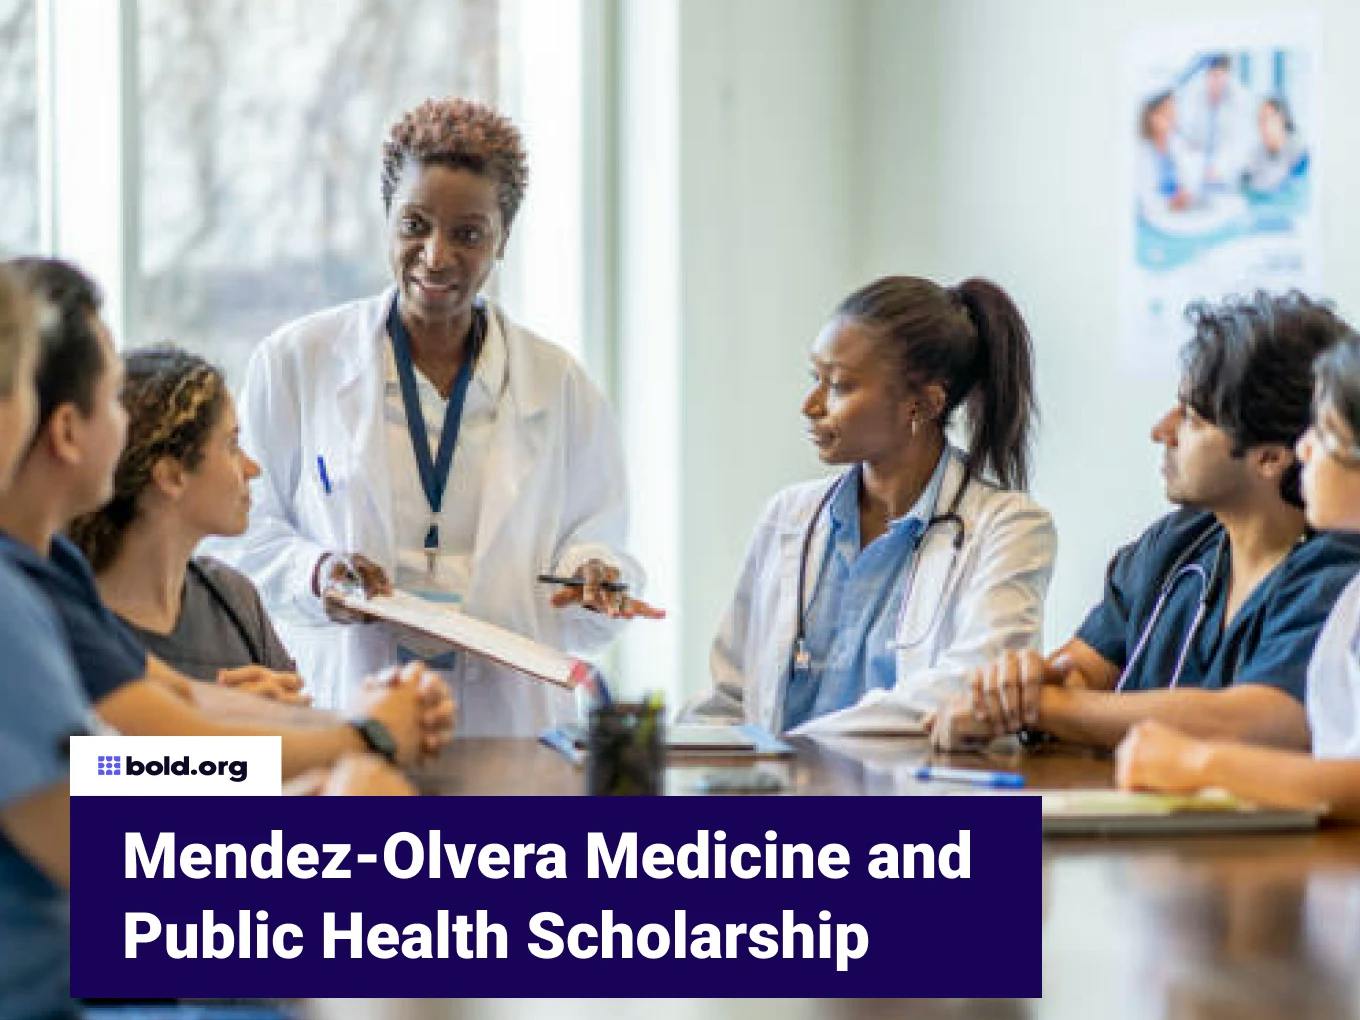 Mendez-Olvera Medicine and Public Health Scholarship